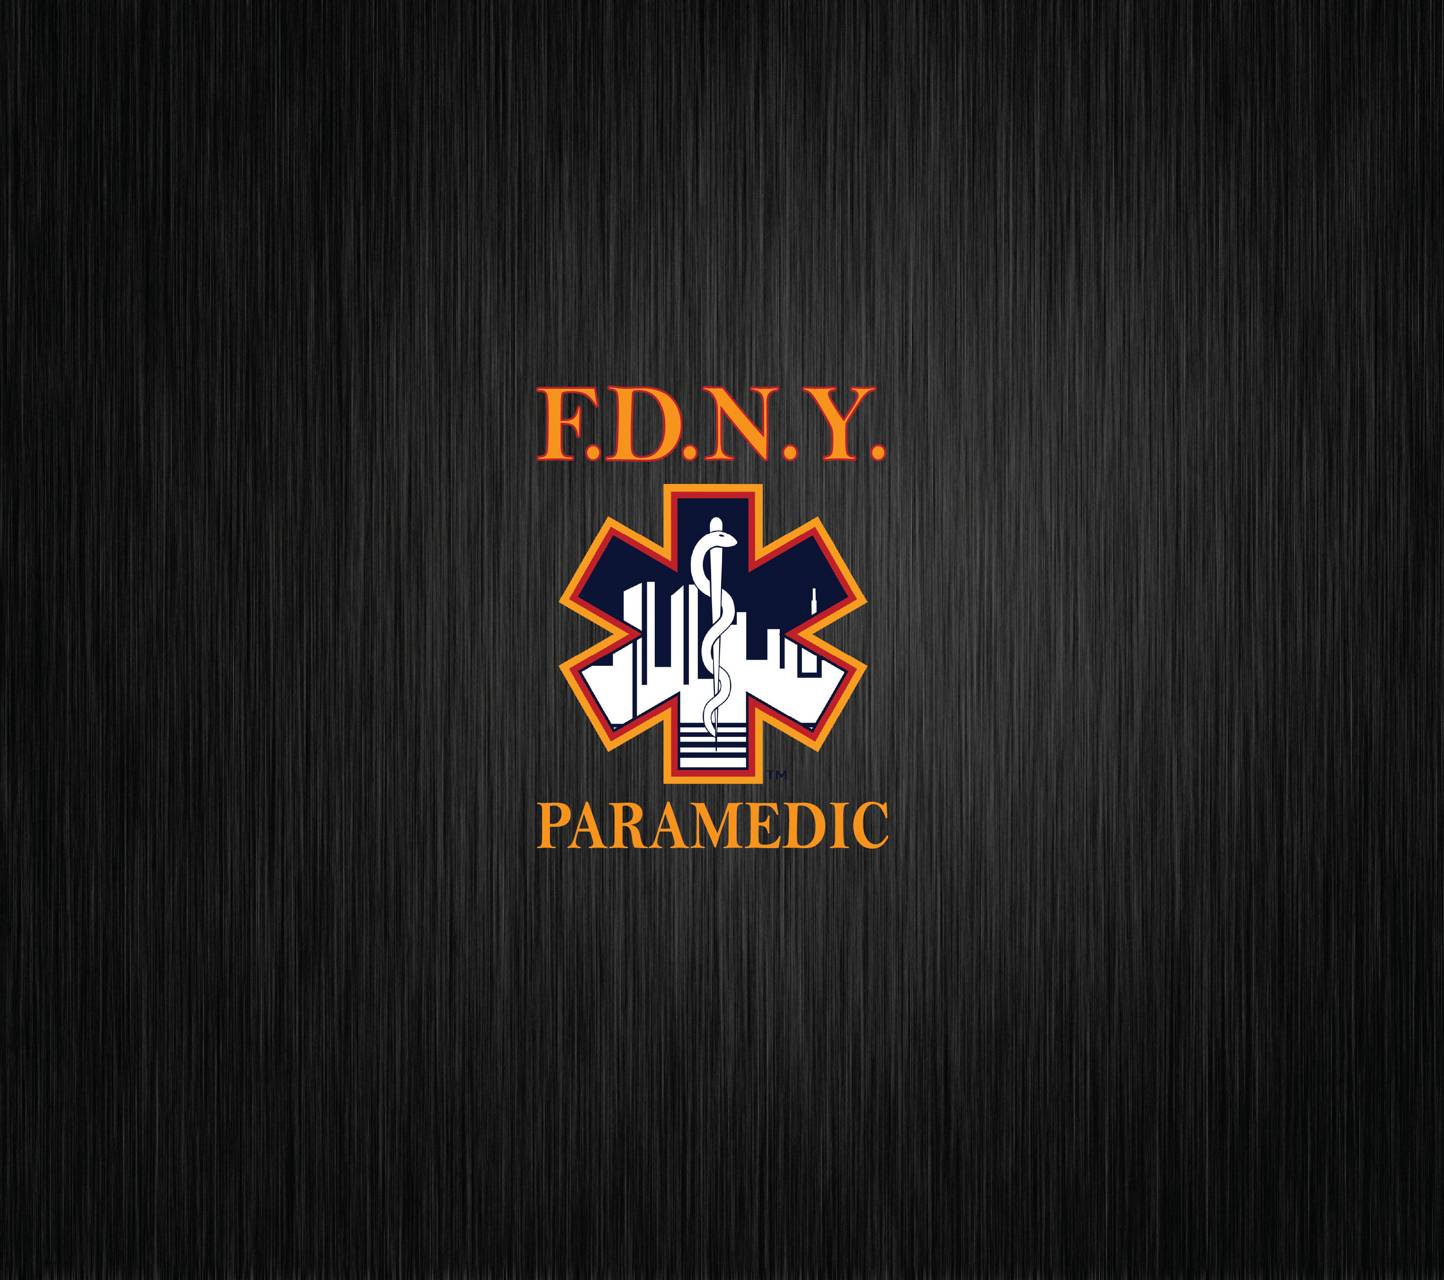 FDNY Paramedic wallpaper